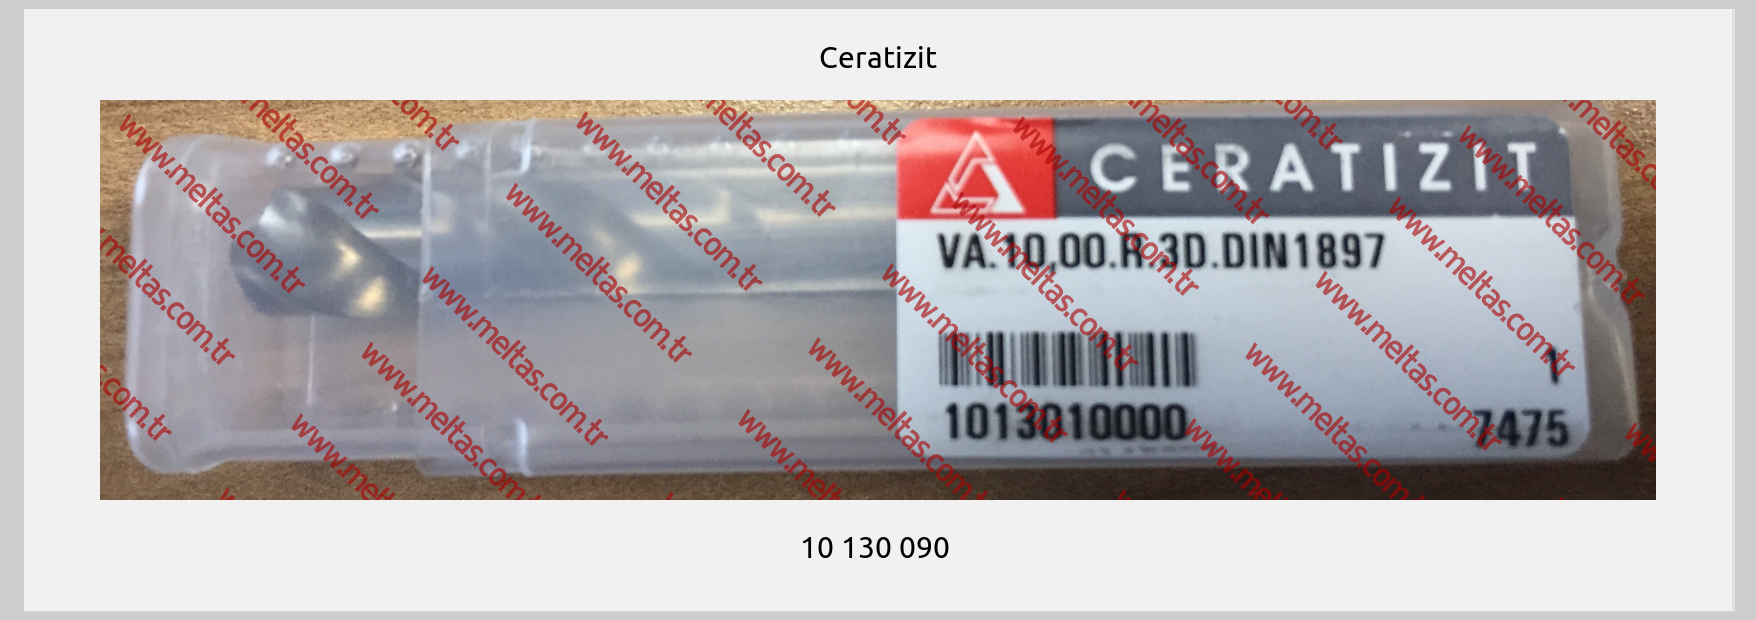 Ceratizit - 10 130 090 